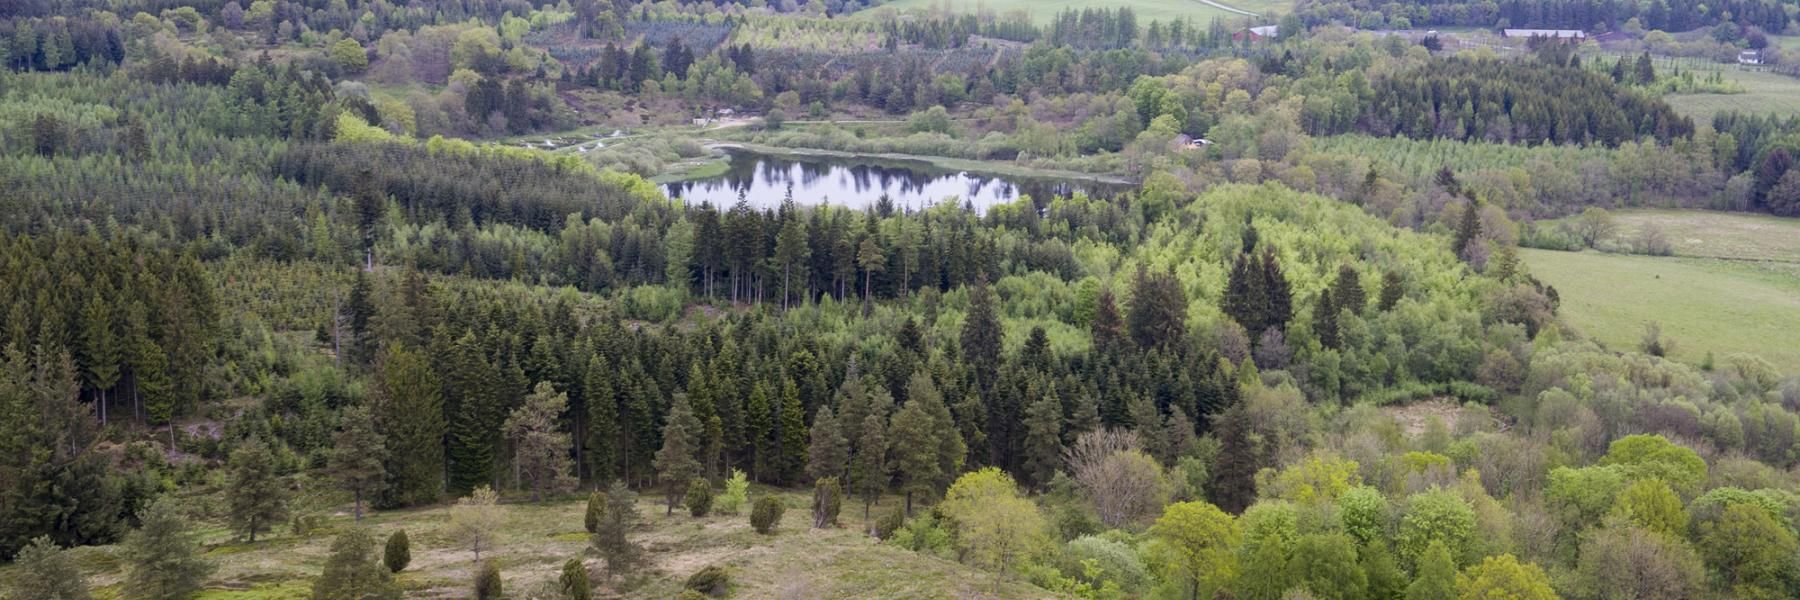 Naturområde - skovområde med sø